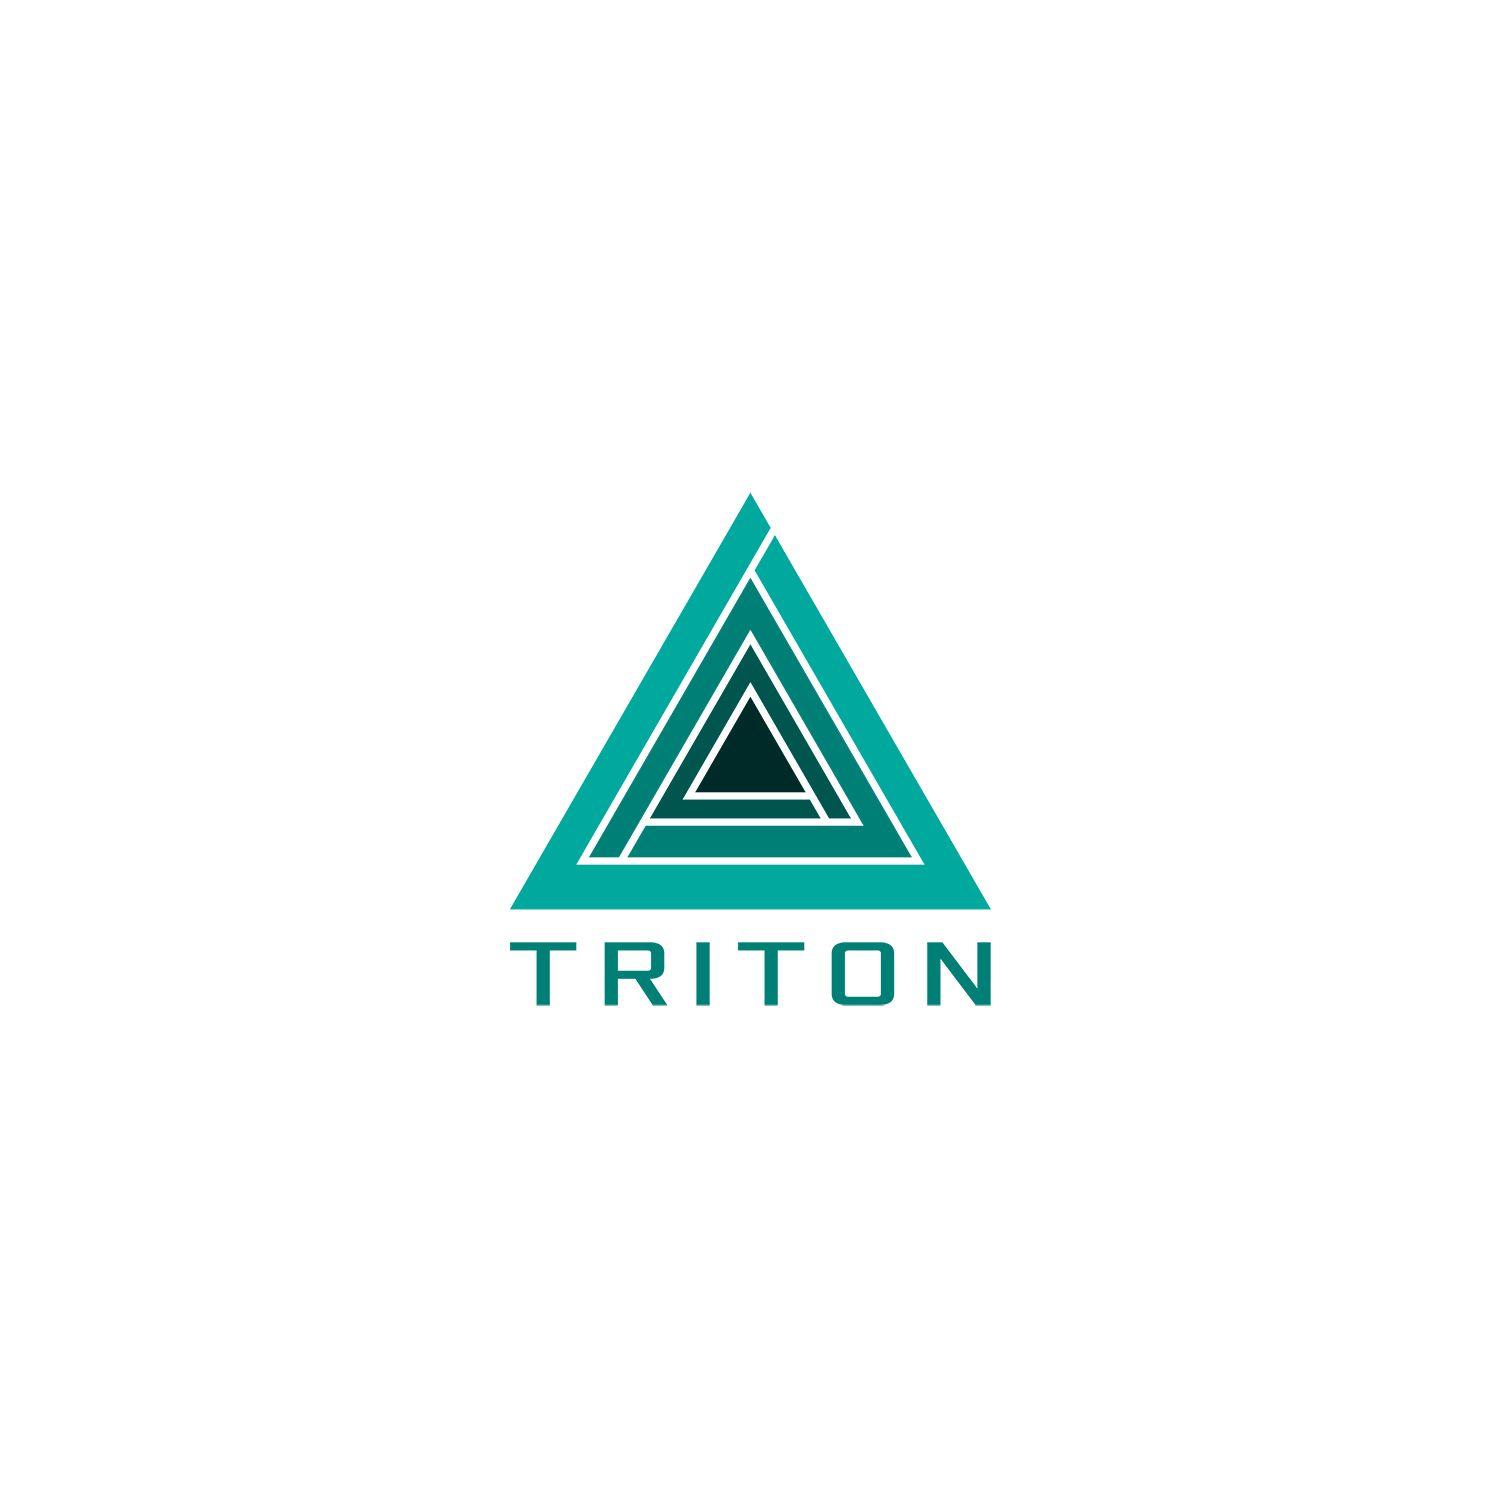 Triton Triangle Logo - Logo Design for Triton by bram_pj | Design #18418509